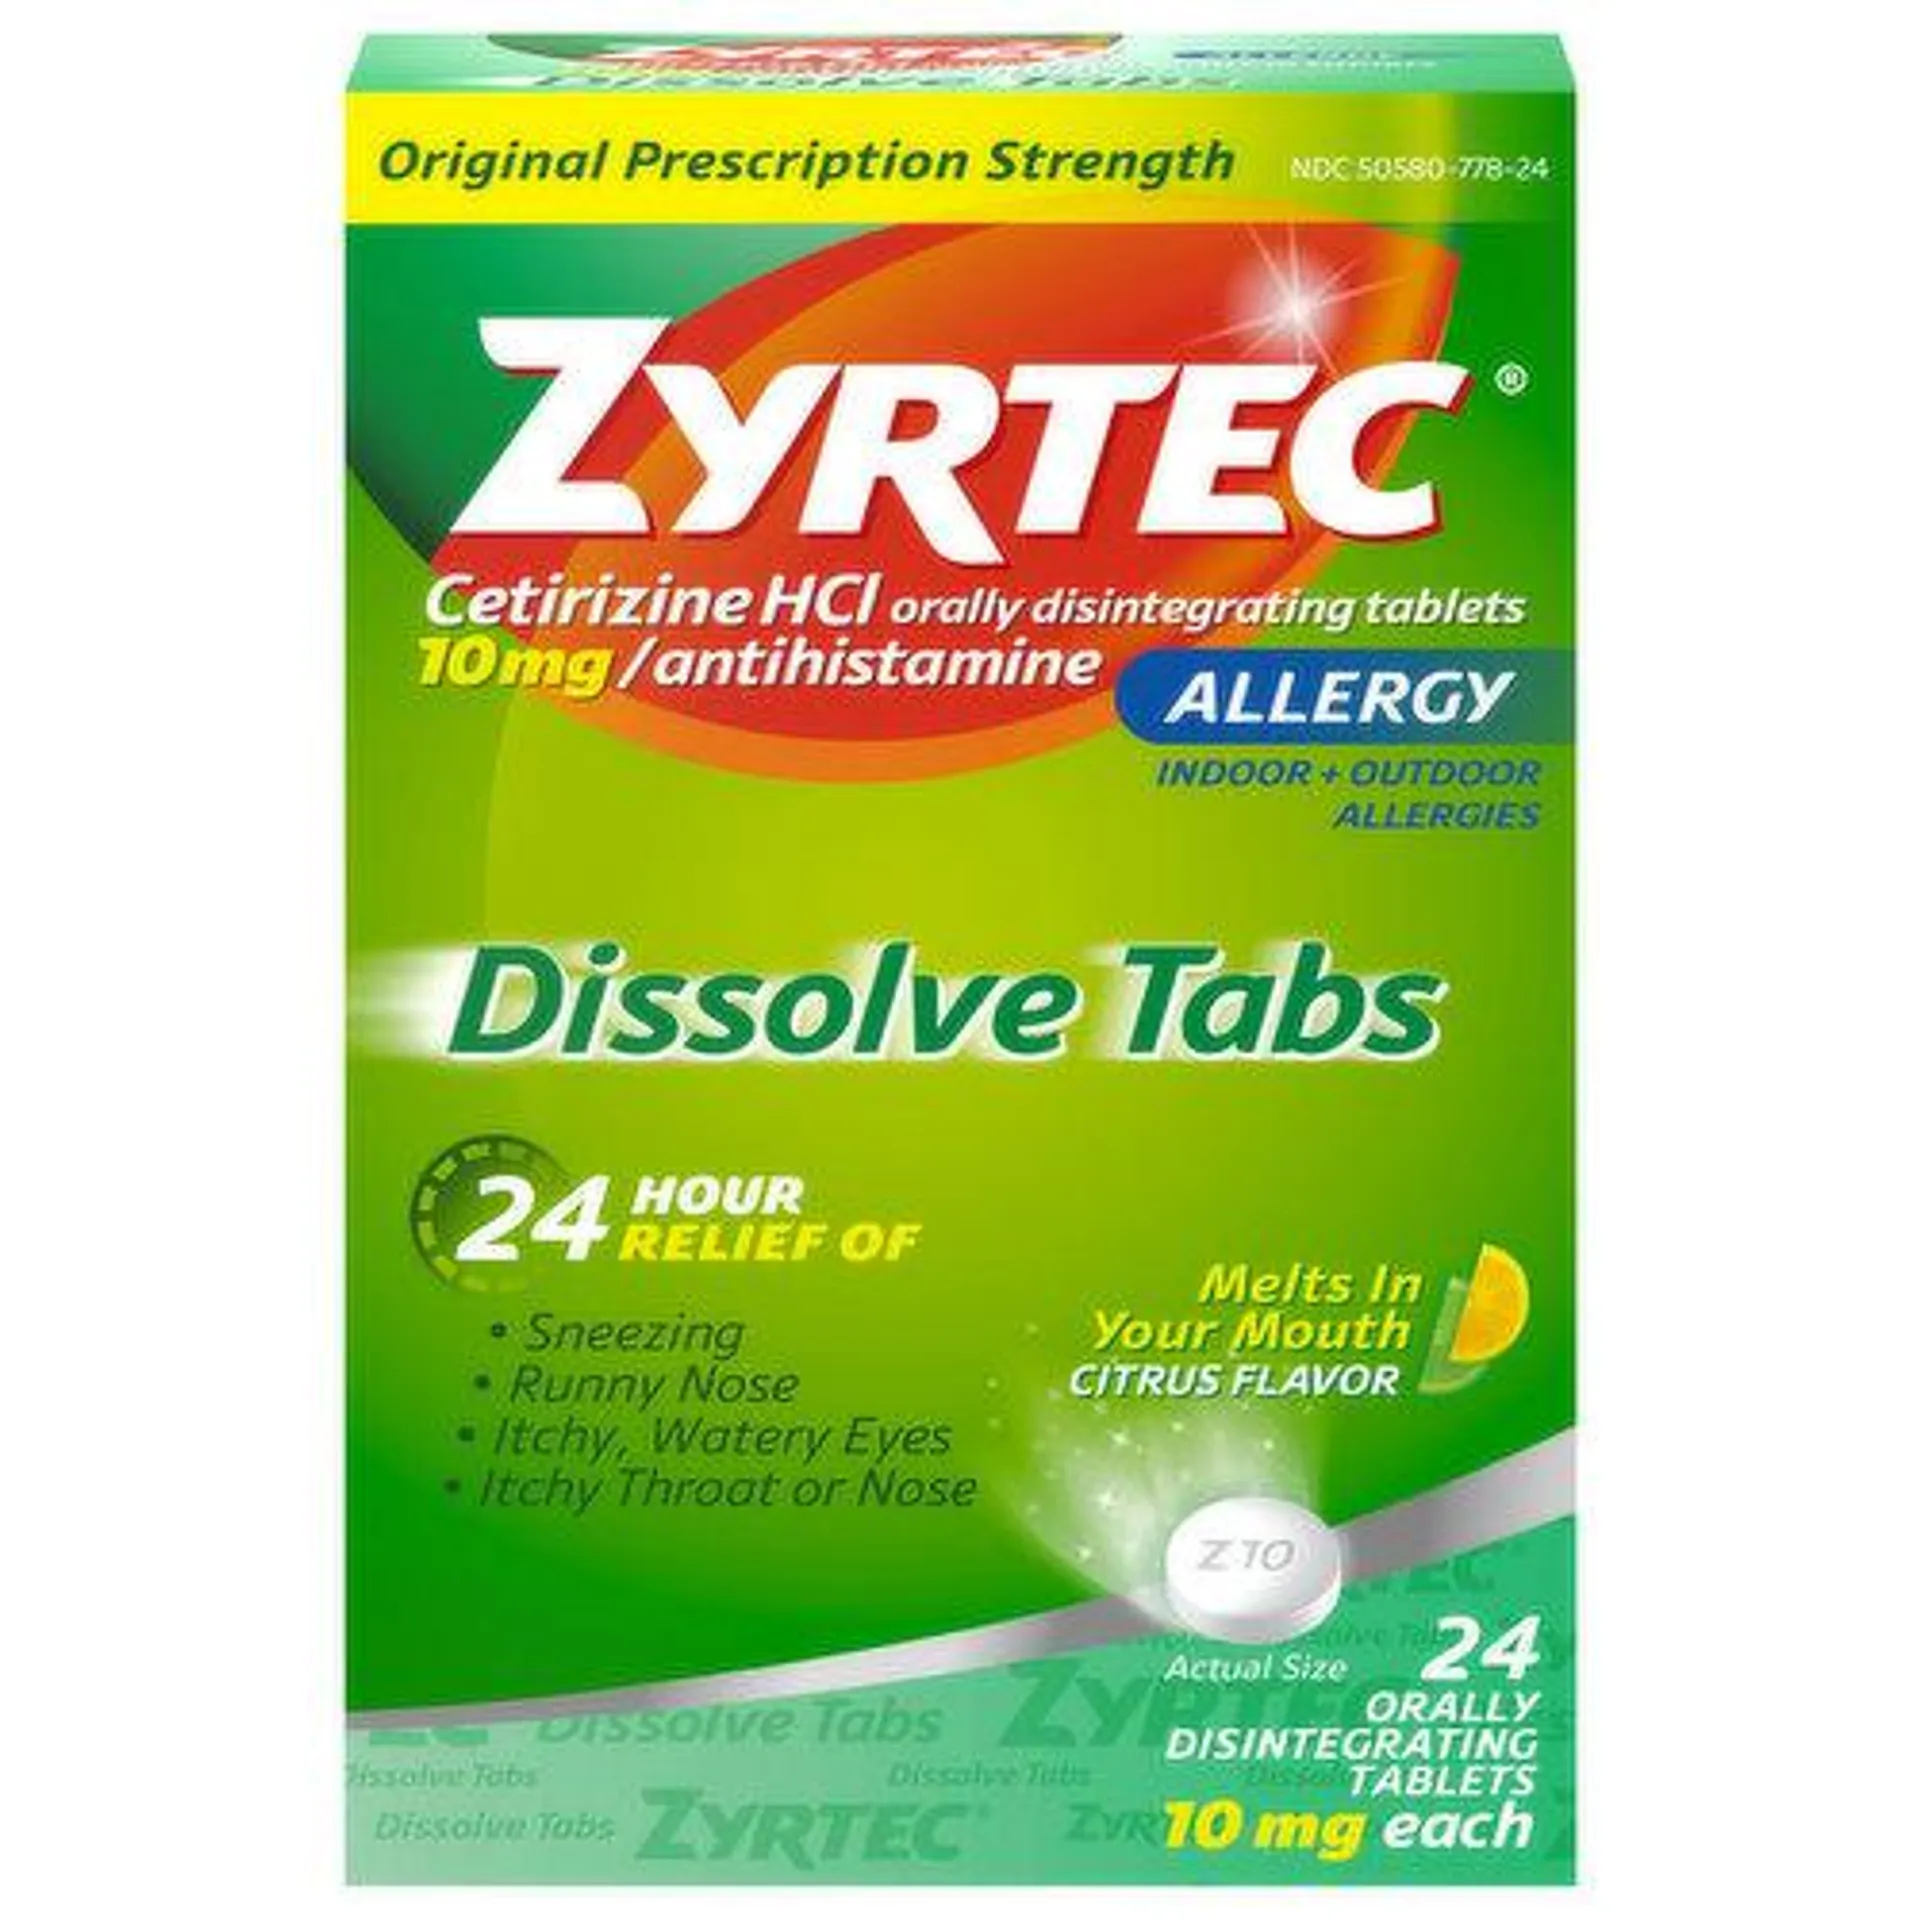 Zyrtec Allergy, Original Prescription Strength, 10 mg, Citrus Flavor, Tablets, 24 Each